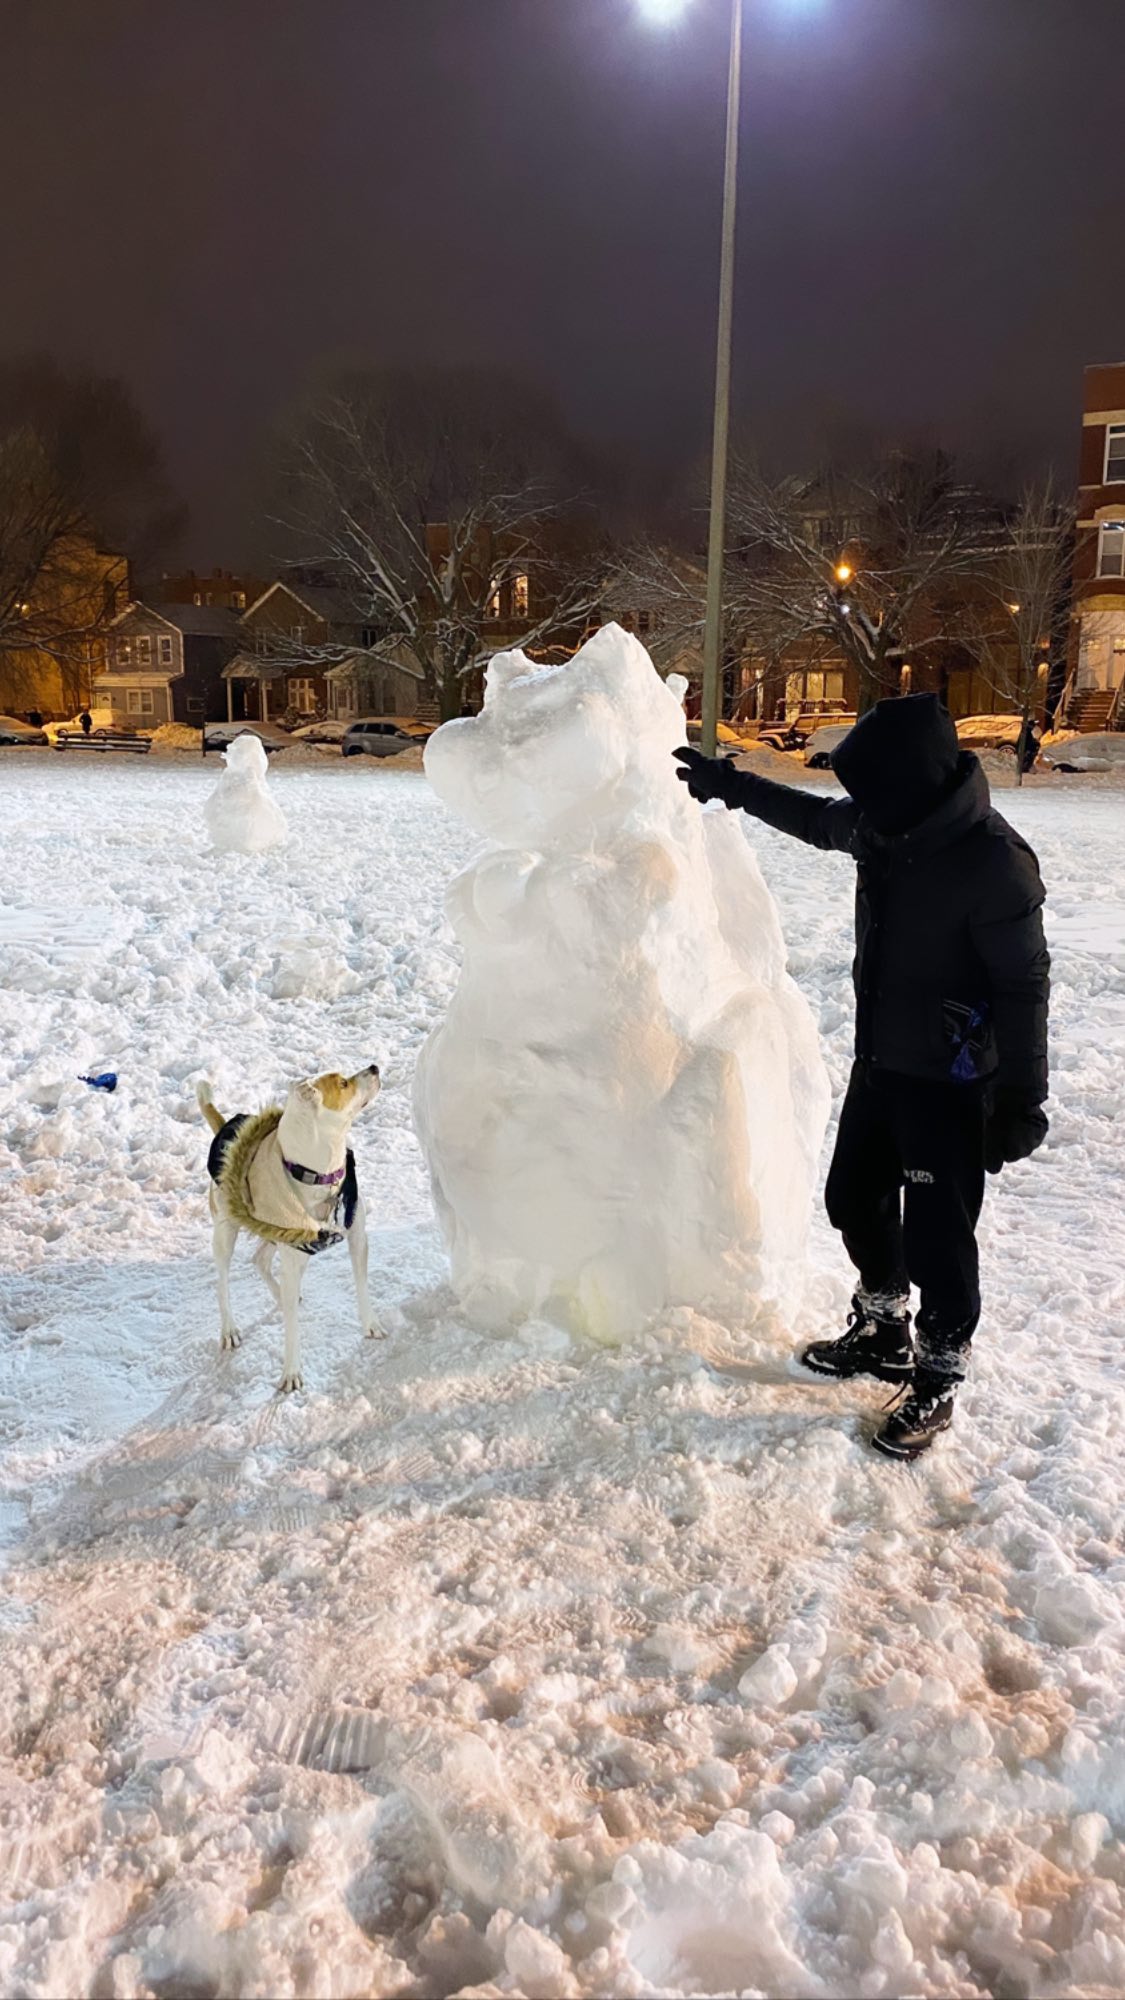 Sydney Sweeney Builds a Snowman Army! - Photo 2